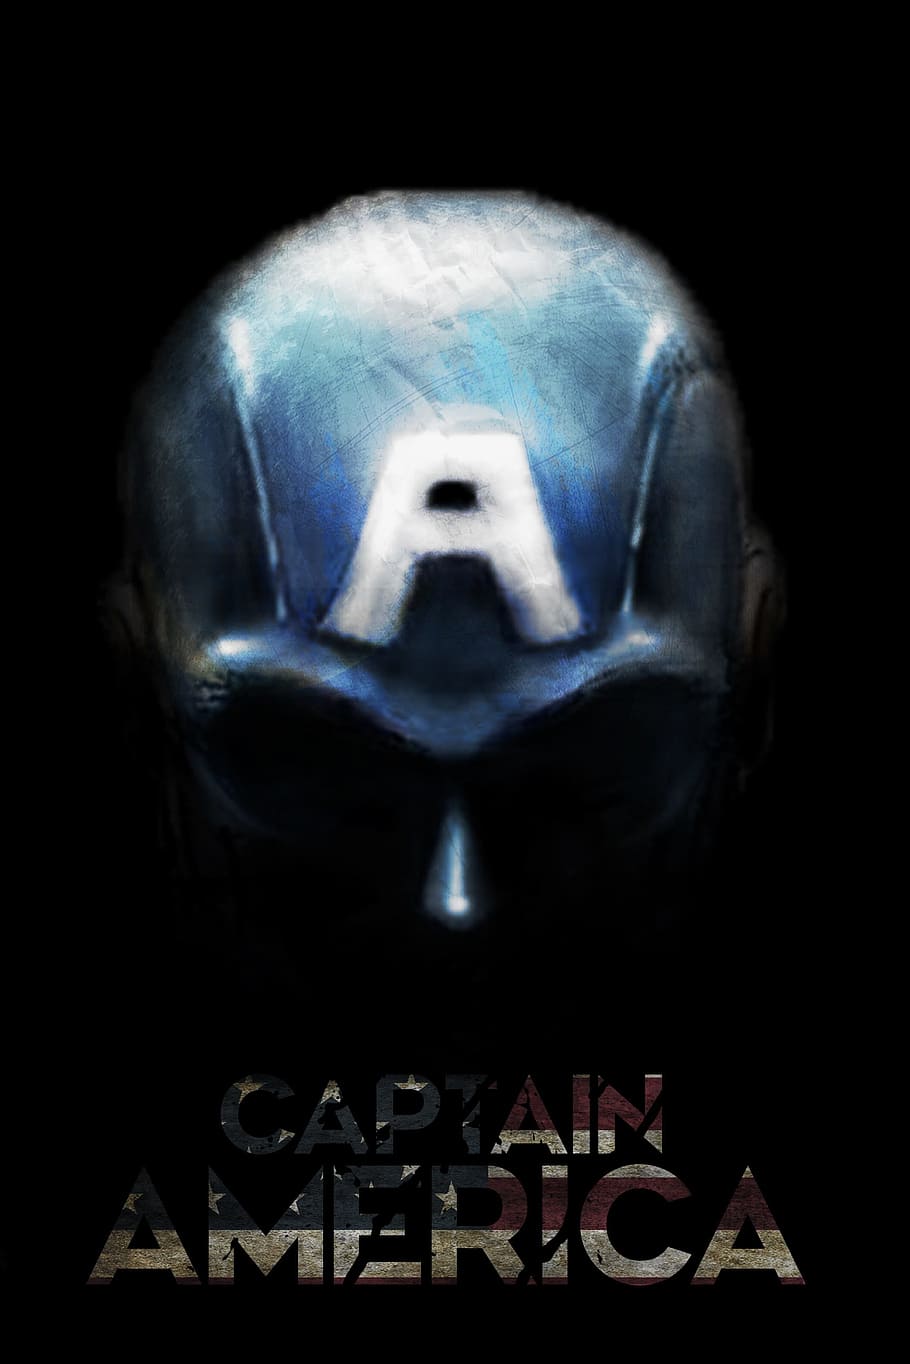 captain america, capitanamerica, marvel, avengers, film, action, close-up, teks, latar belakang hitam, bagian tubuh manusia